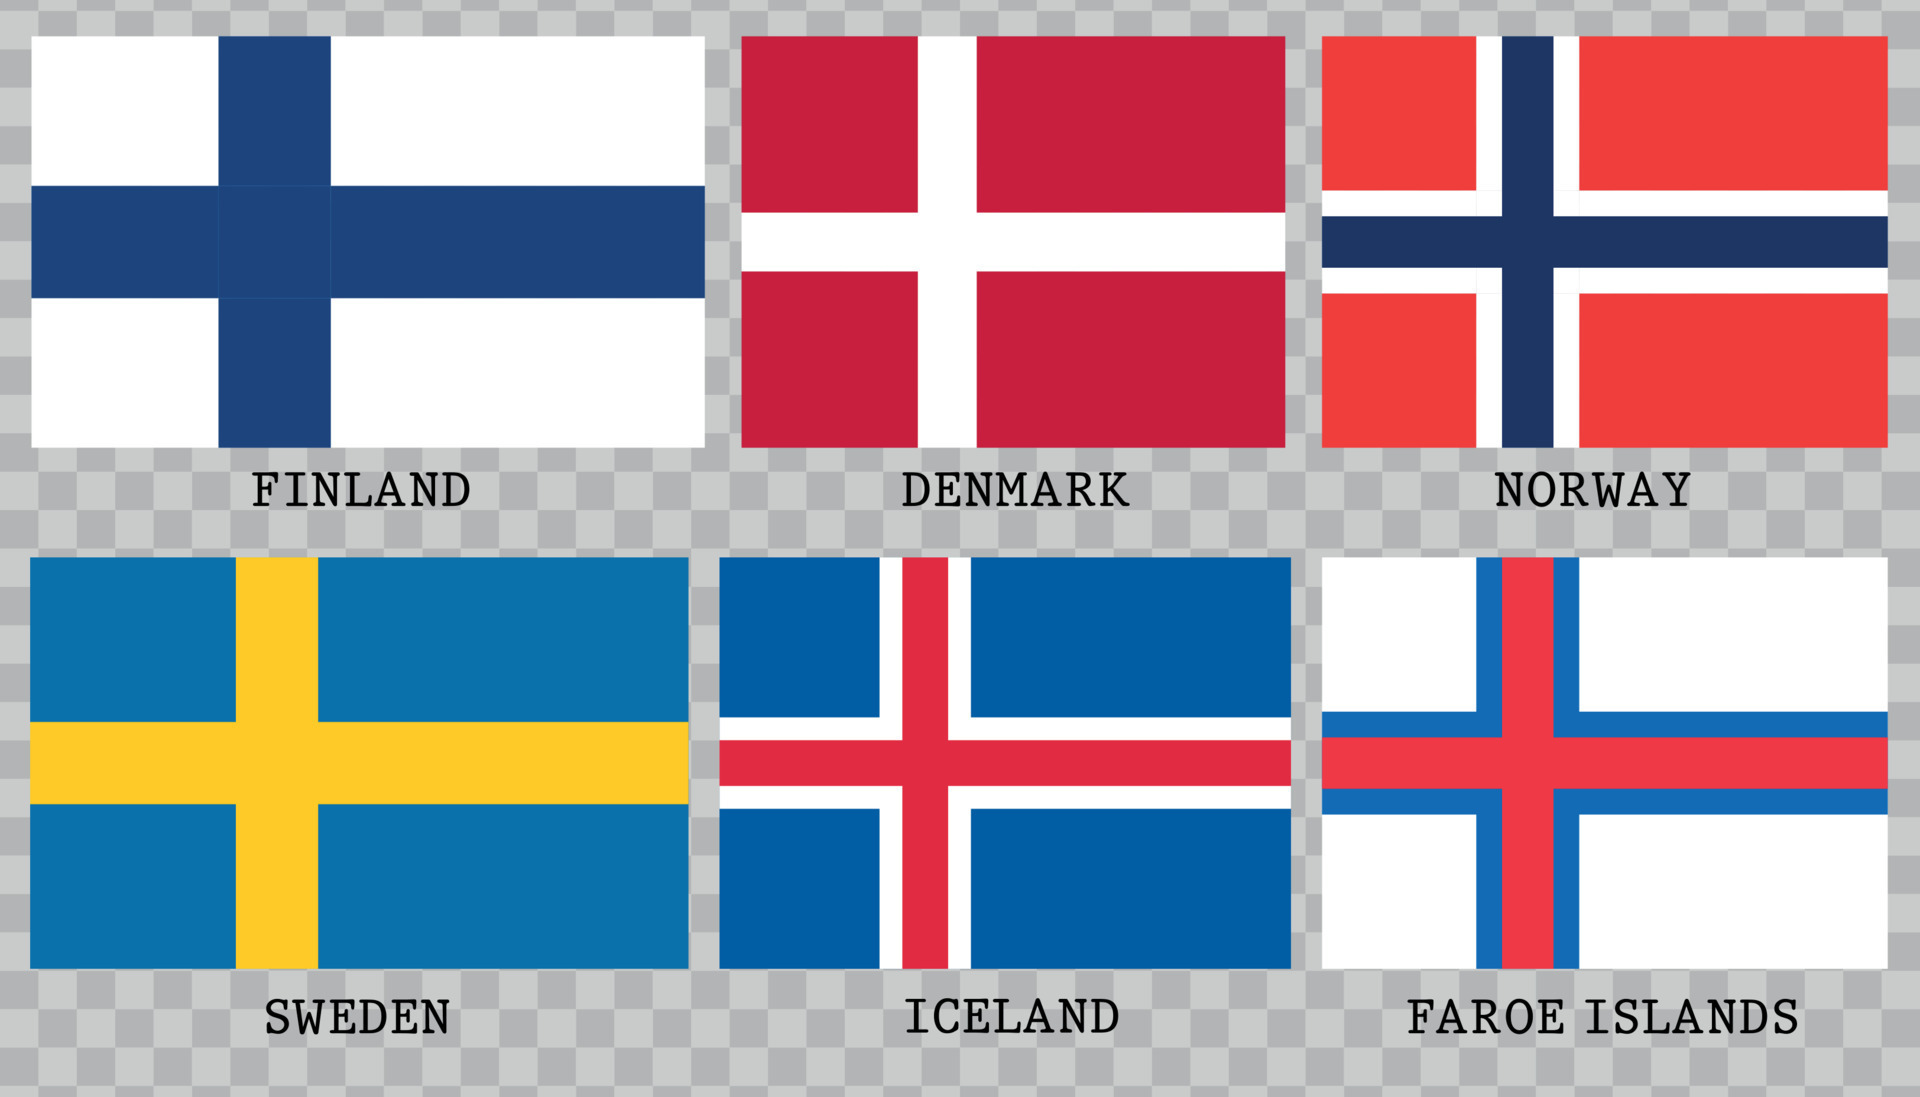 bandeiras simples da Escandinávia 11176366 Vetor no Vecteezy